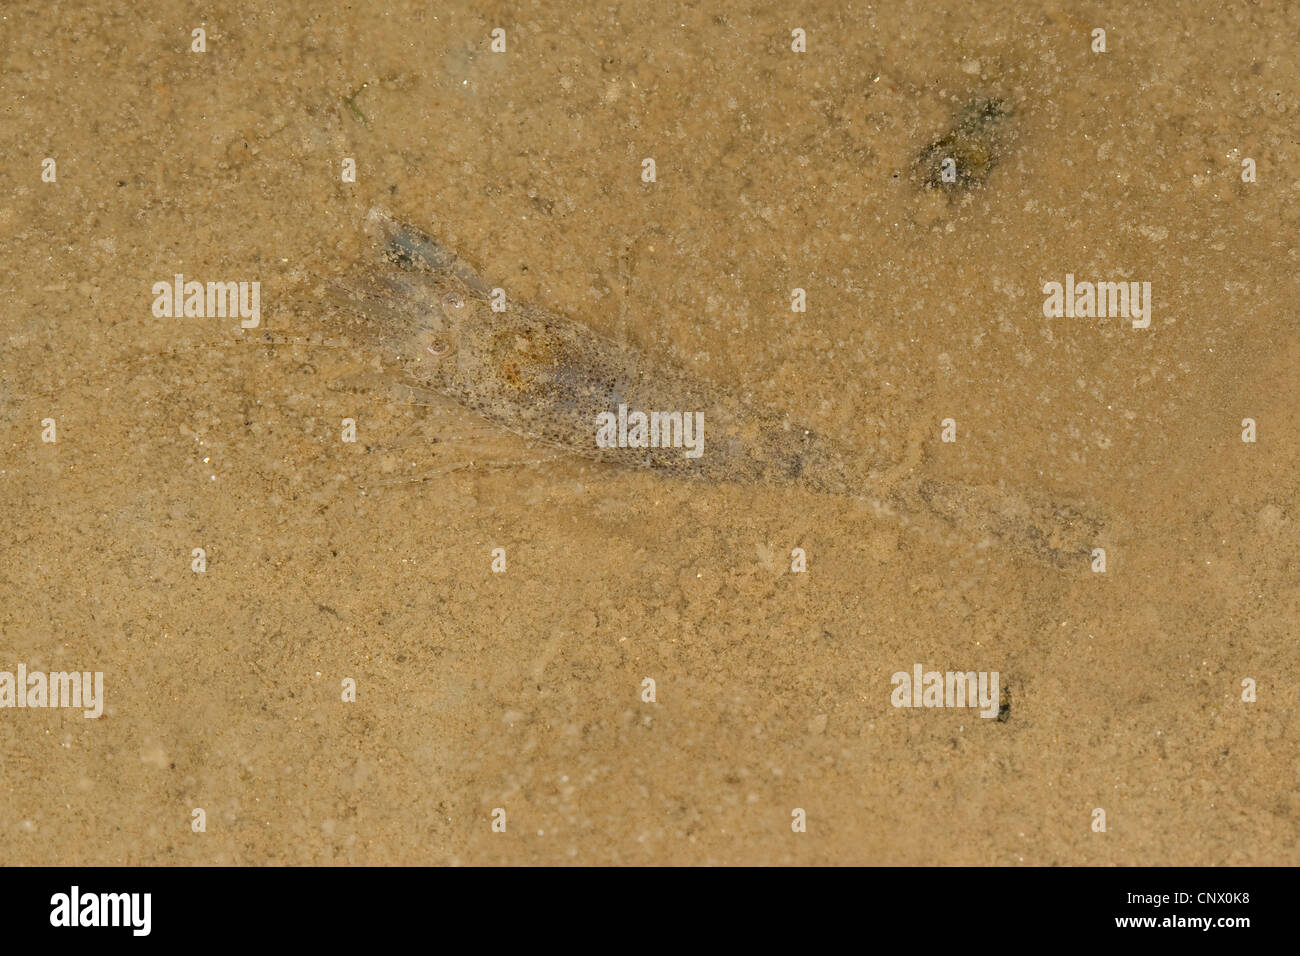 Common shrimp, Common European shrimp, Bbrown shrimp (Crangon crangon), well camouflaged on sand, Germany Stock Photo